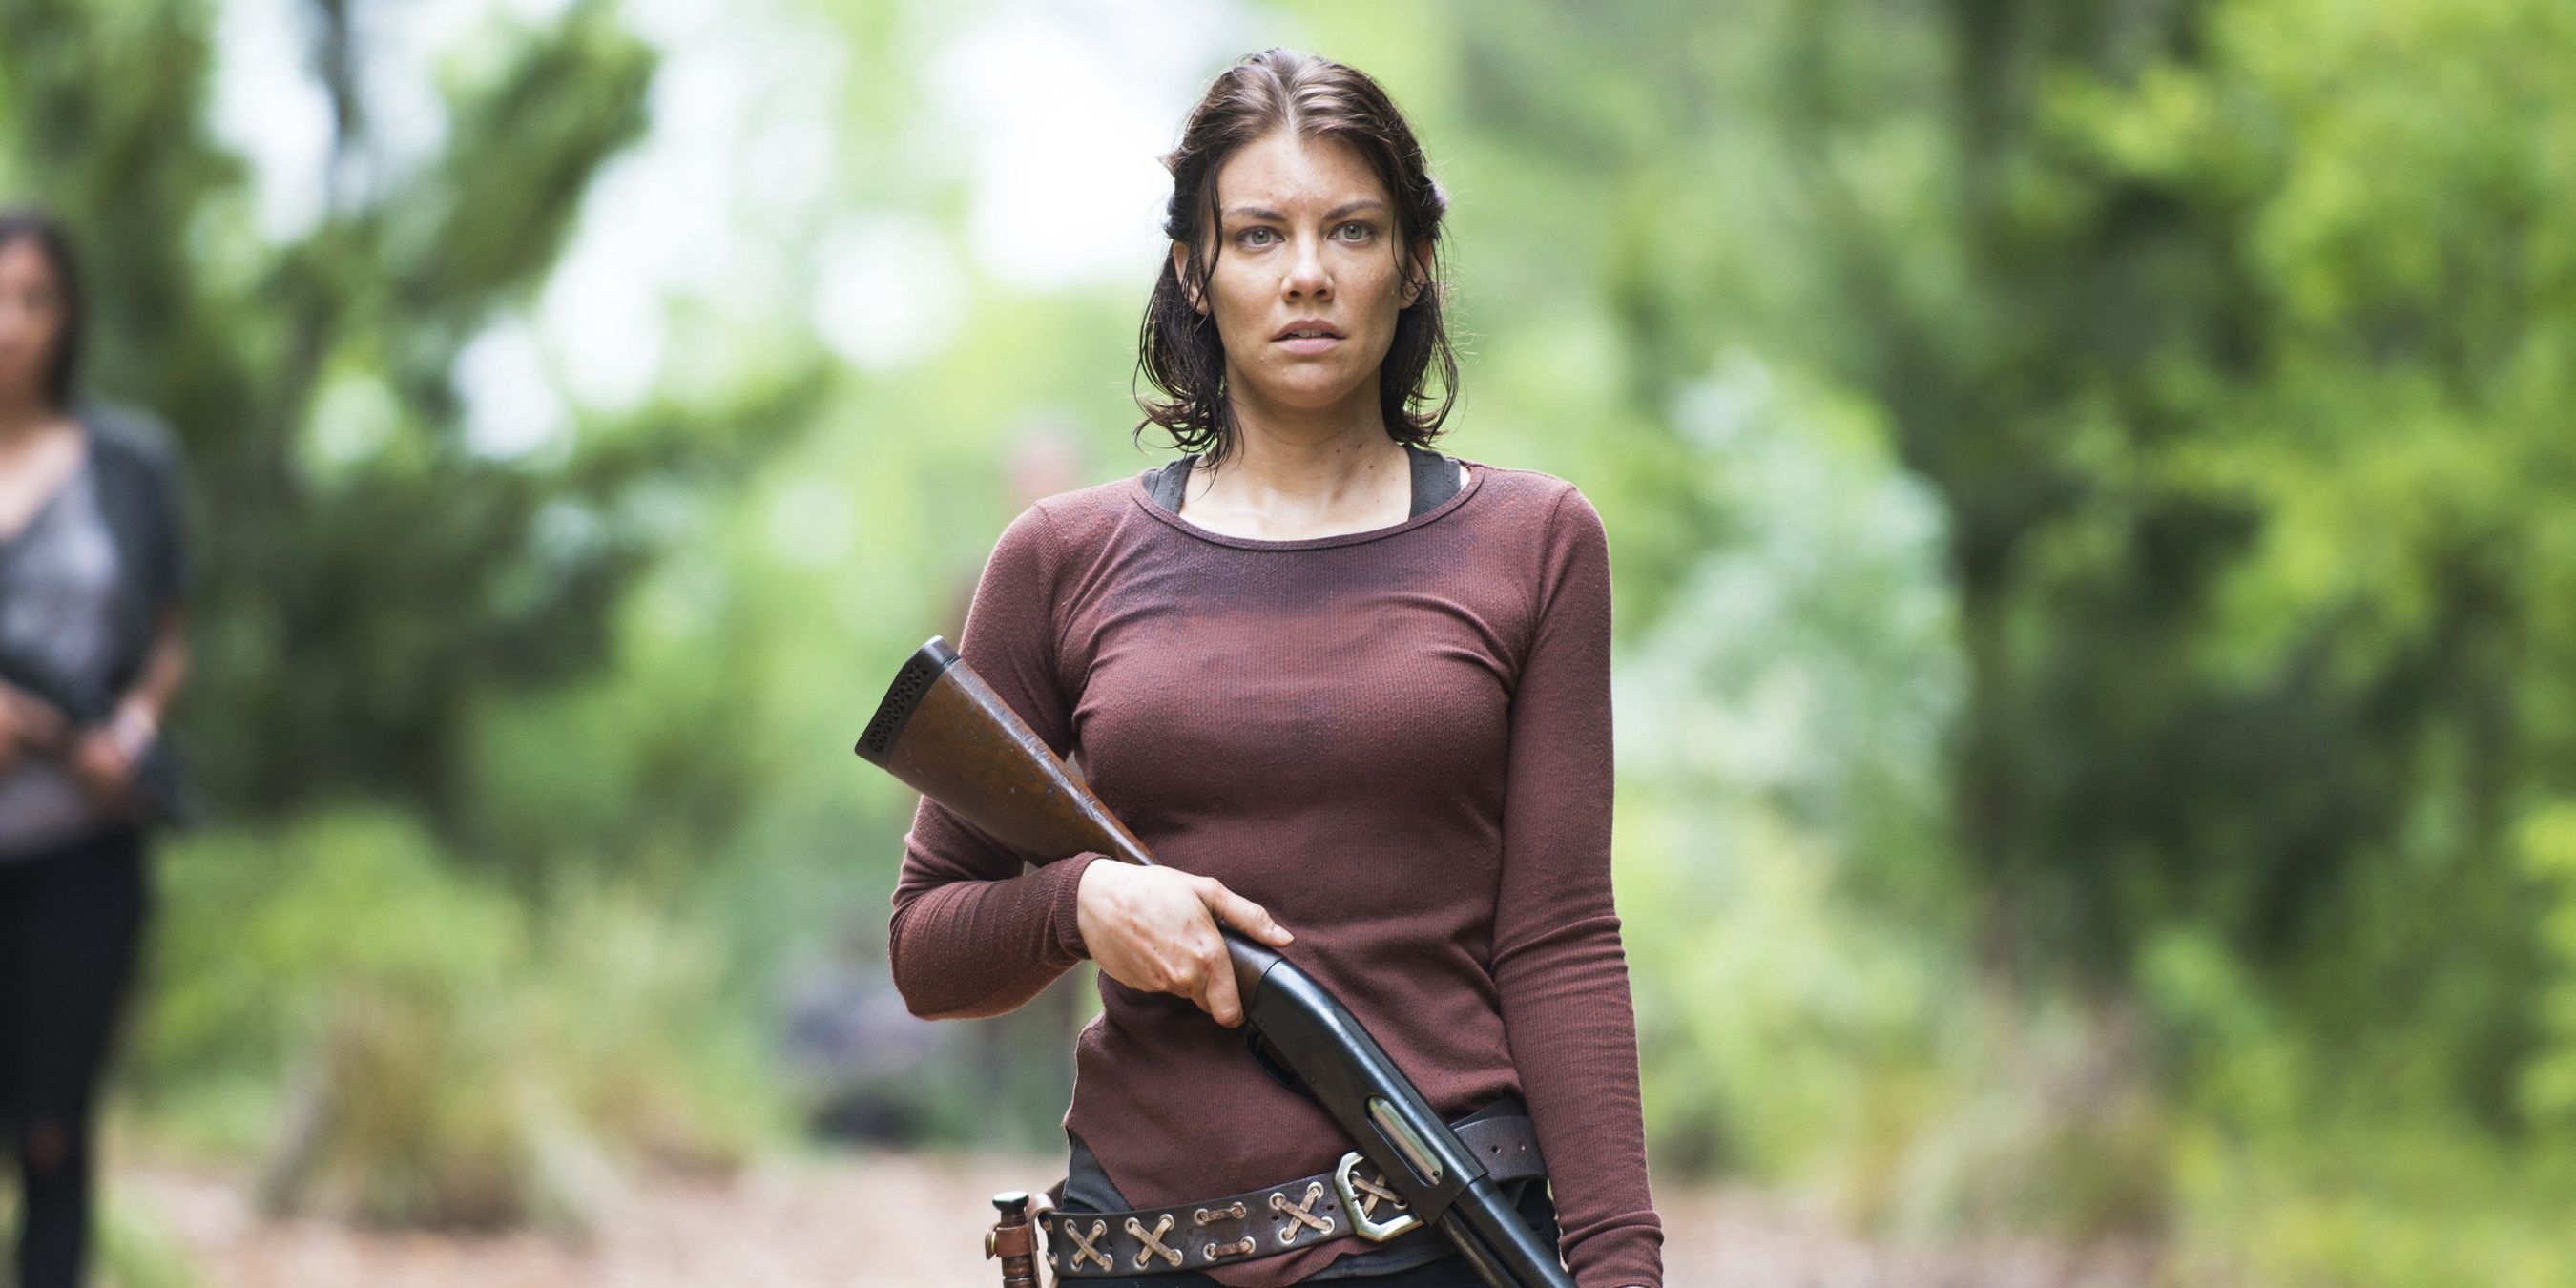 Lauren Cohan as Maggie holding a rifle in The Walking Dead Season 5